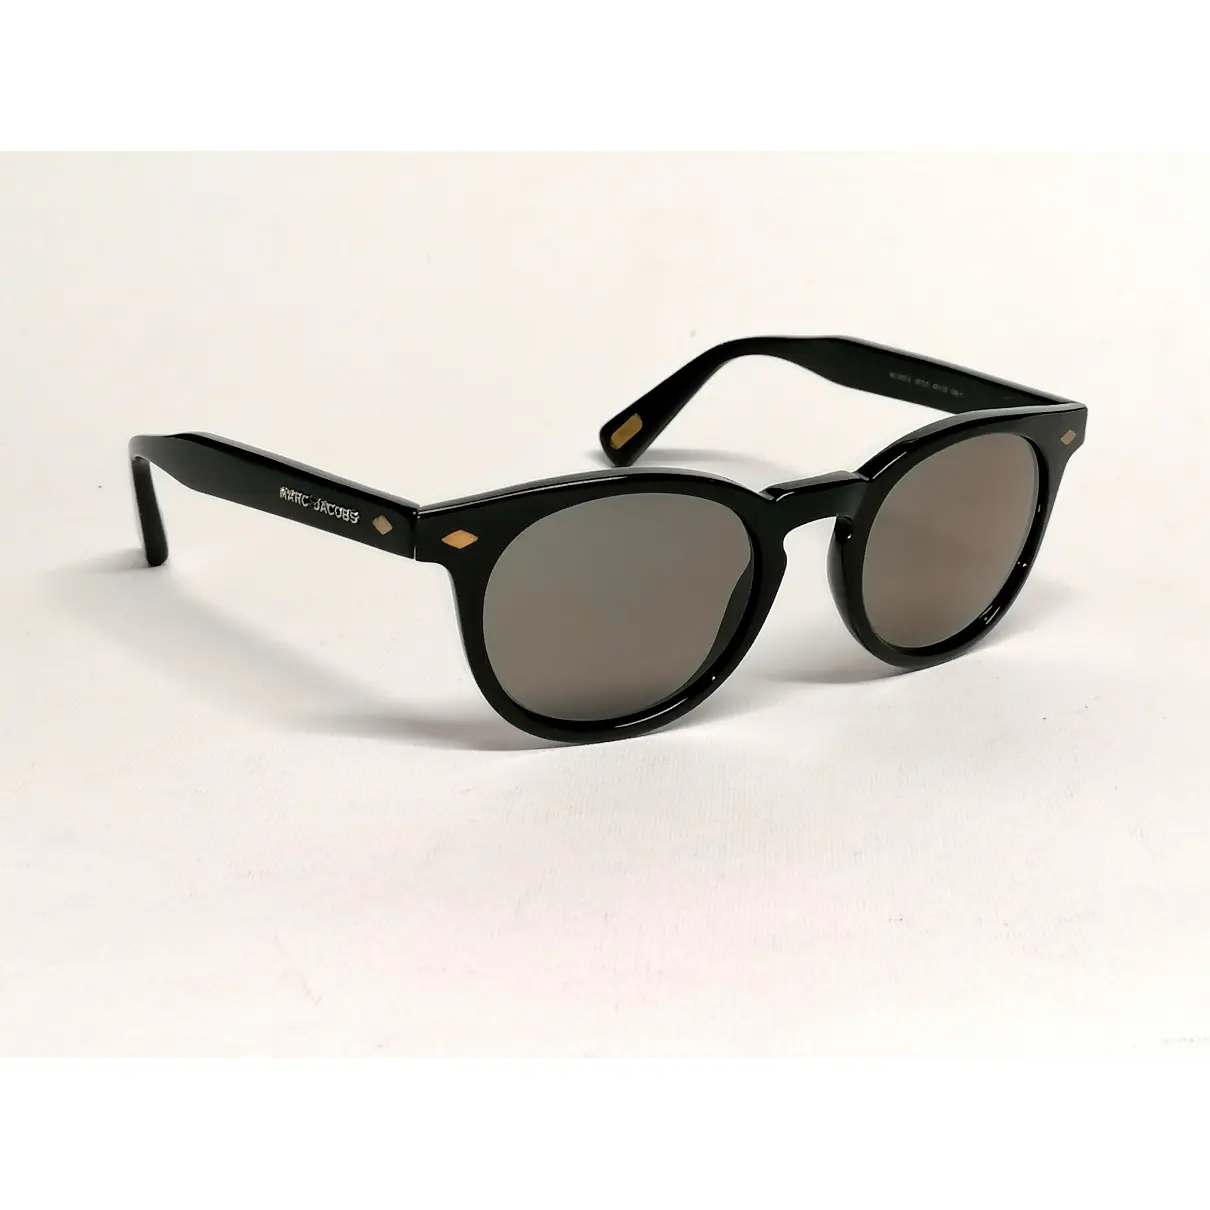 Luxury Marc Jacobs Sunglasses Women - Vintage